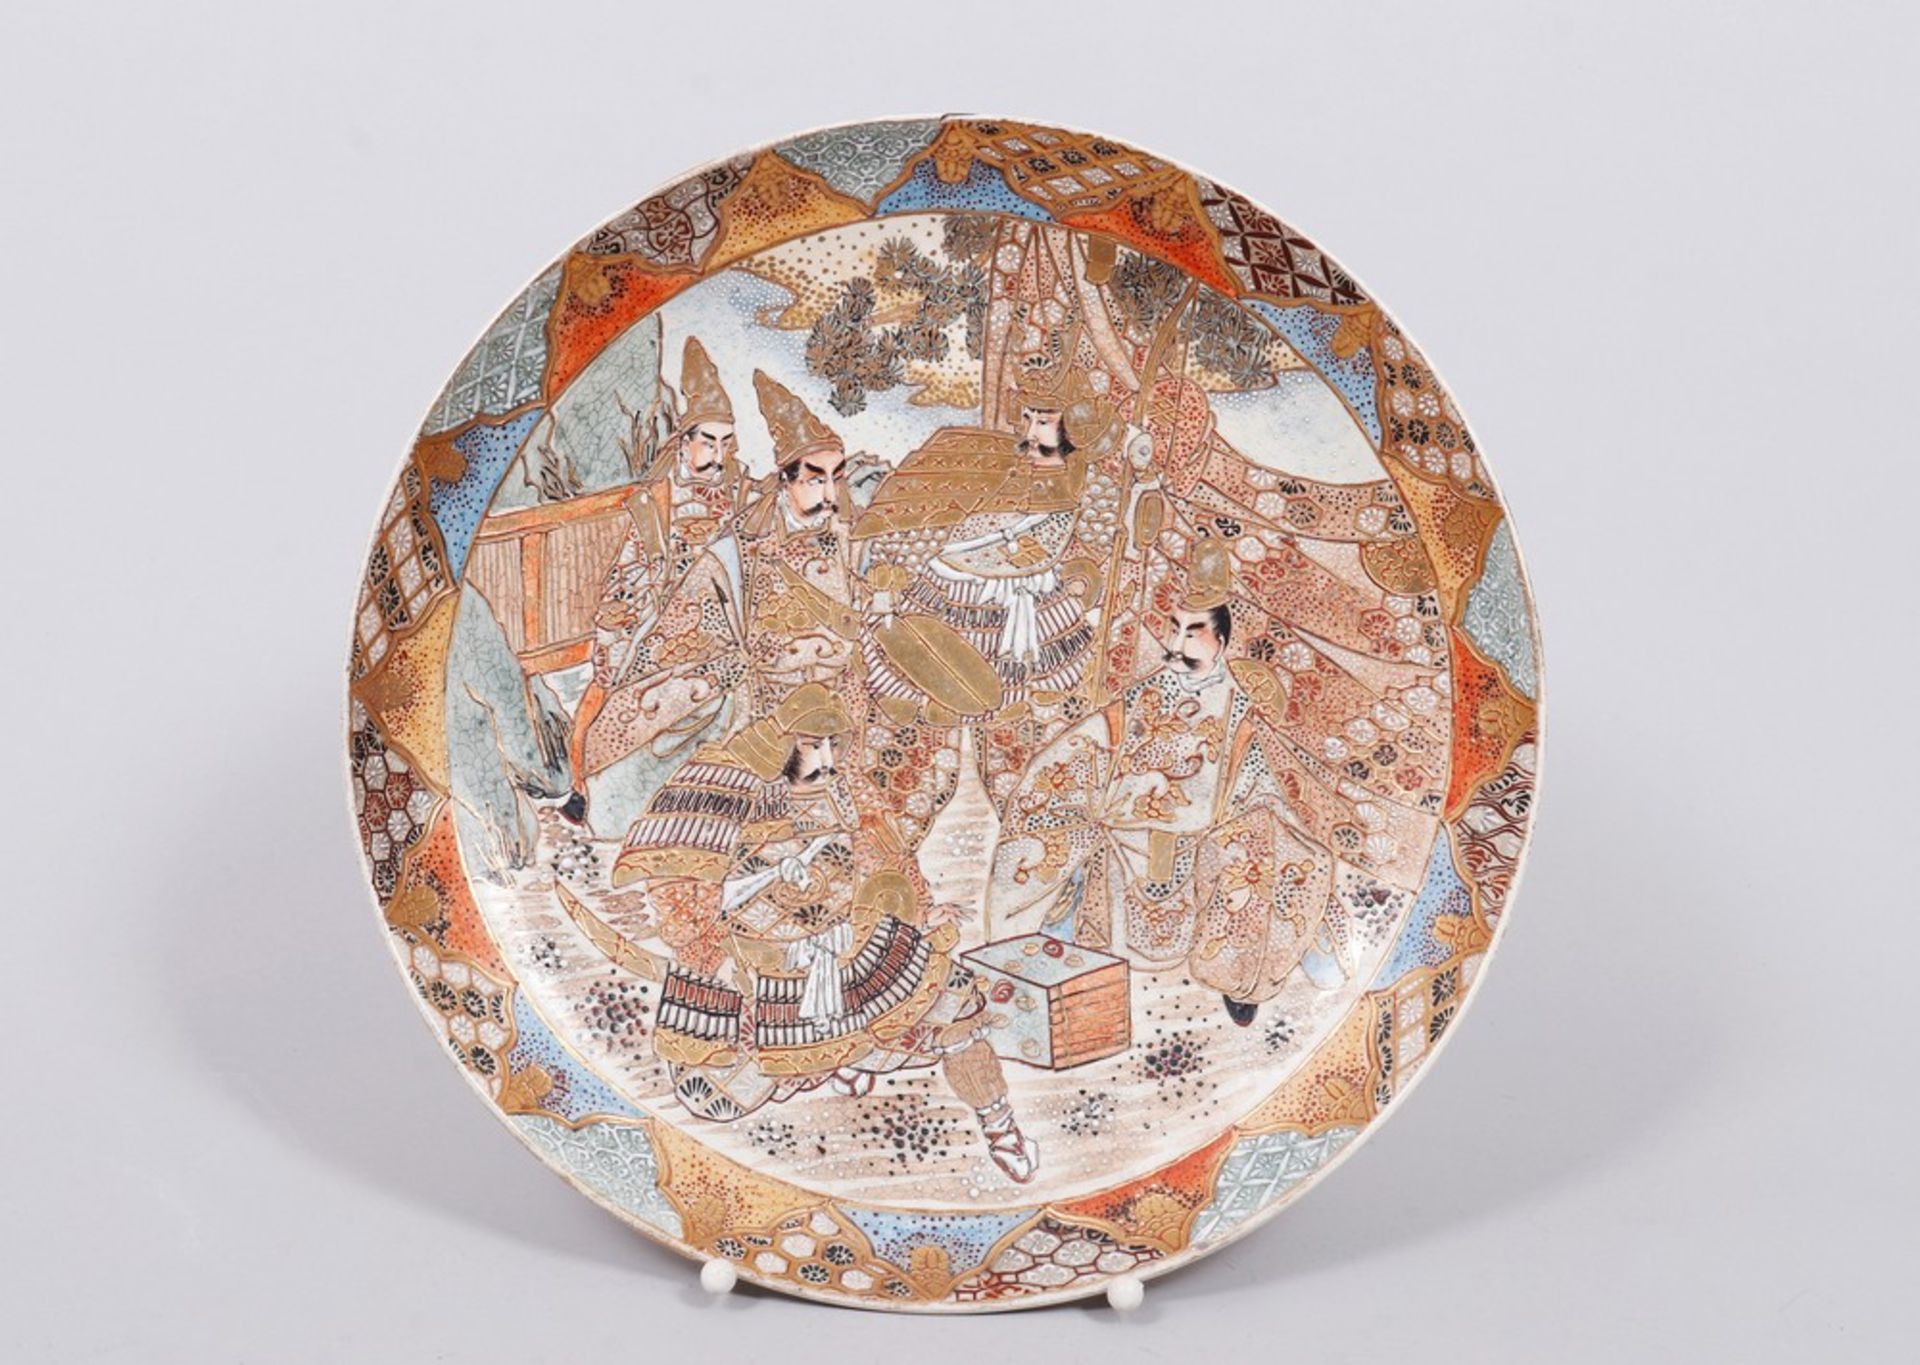 Satsuma plate, Japan, late Meiji period